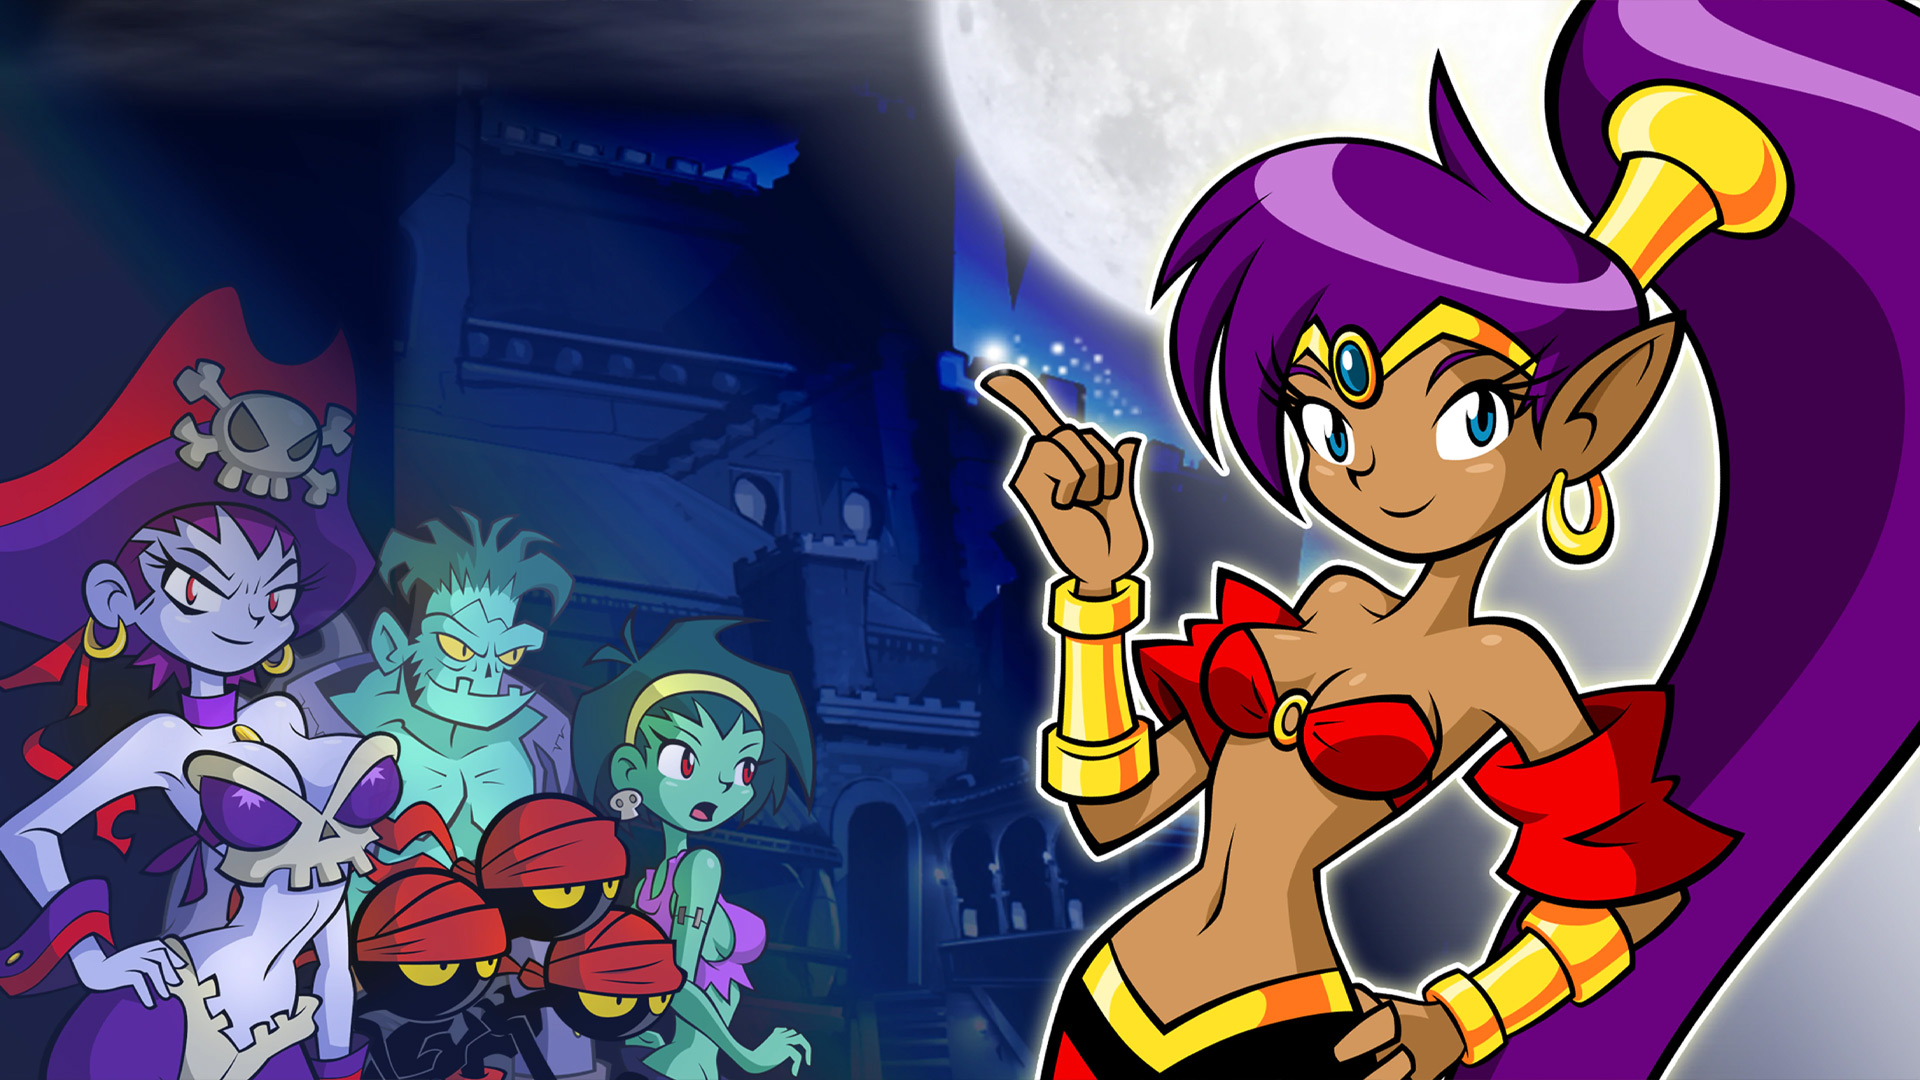 Shantae: Risky’s Revenge – Director’s Cut